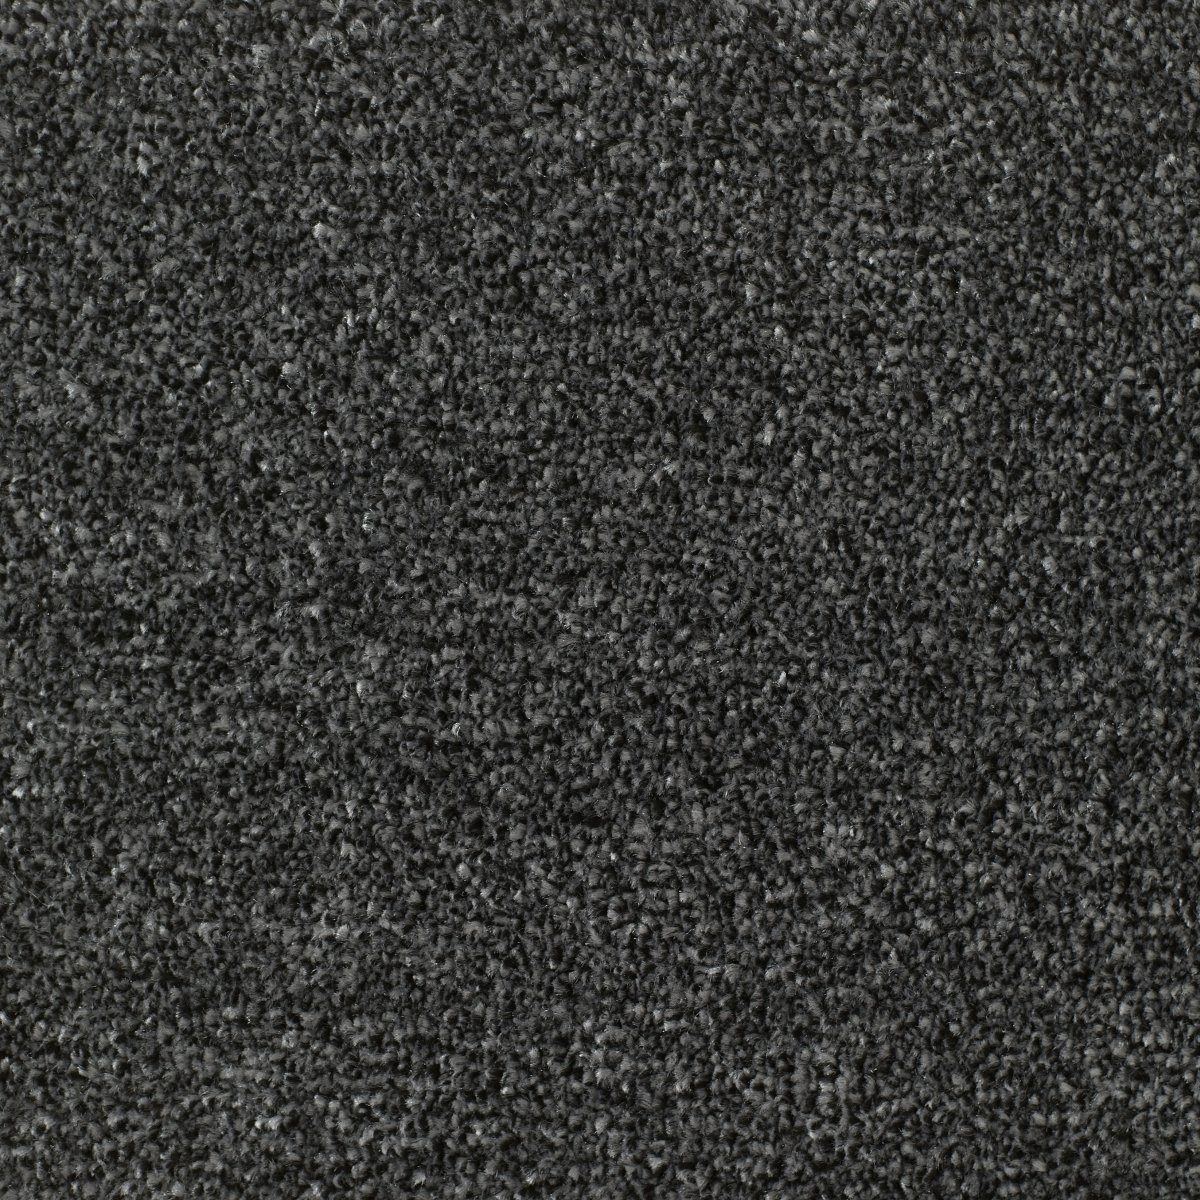 Seaton Valley Soft Deep Pile Saxony Carpet -  Black